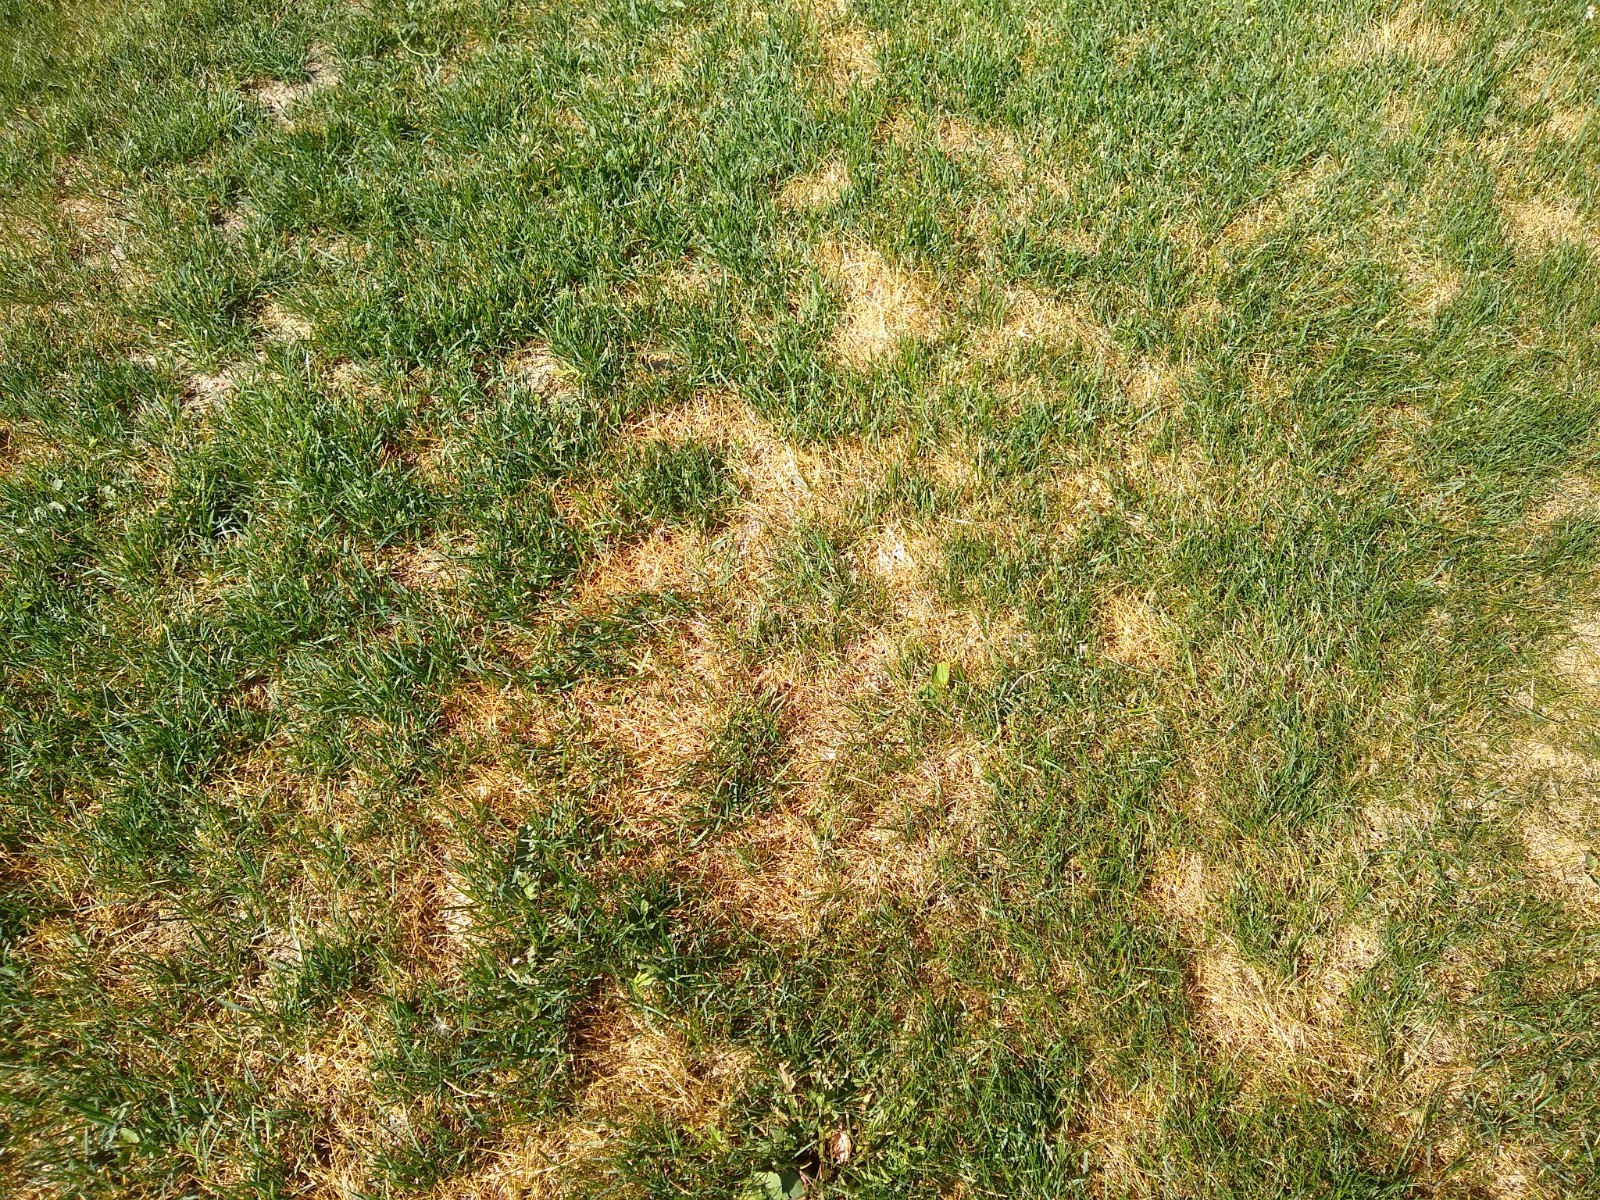 Diagnosing dead spots in lawn #645884 - Ask Extension